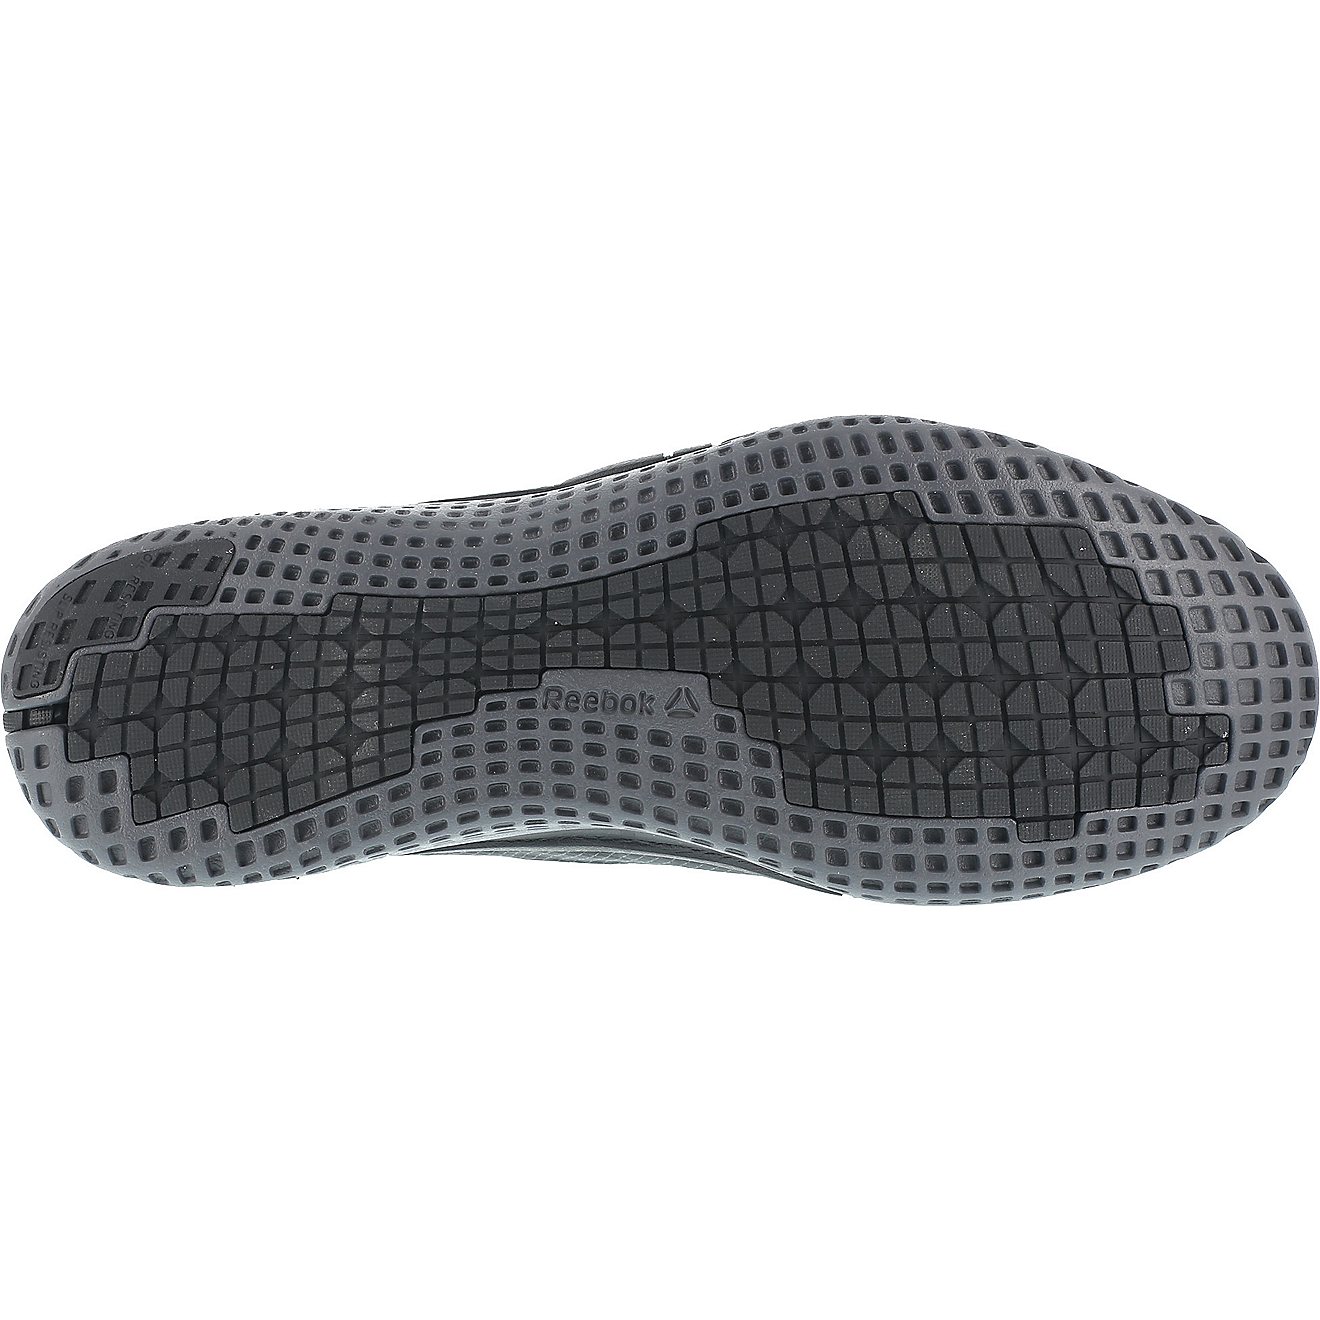 Reebok Men's Zprint Steel Toe Lace Up Work Shoes                                                                                 - view number 5